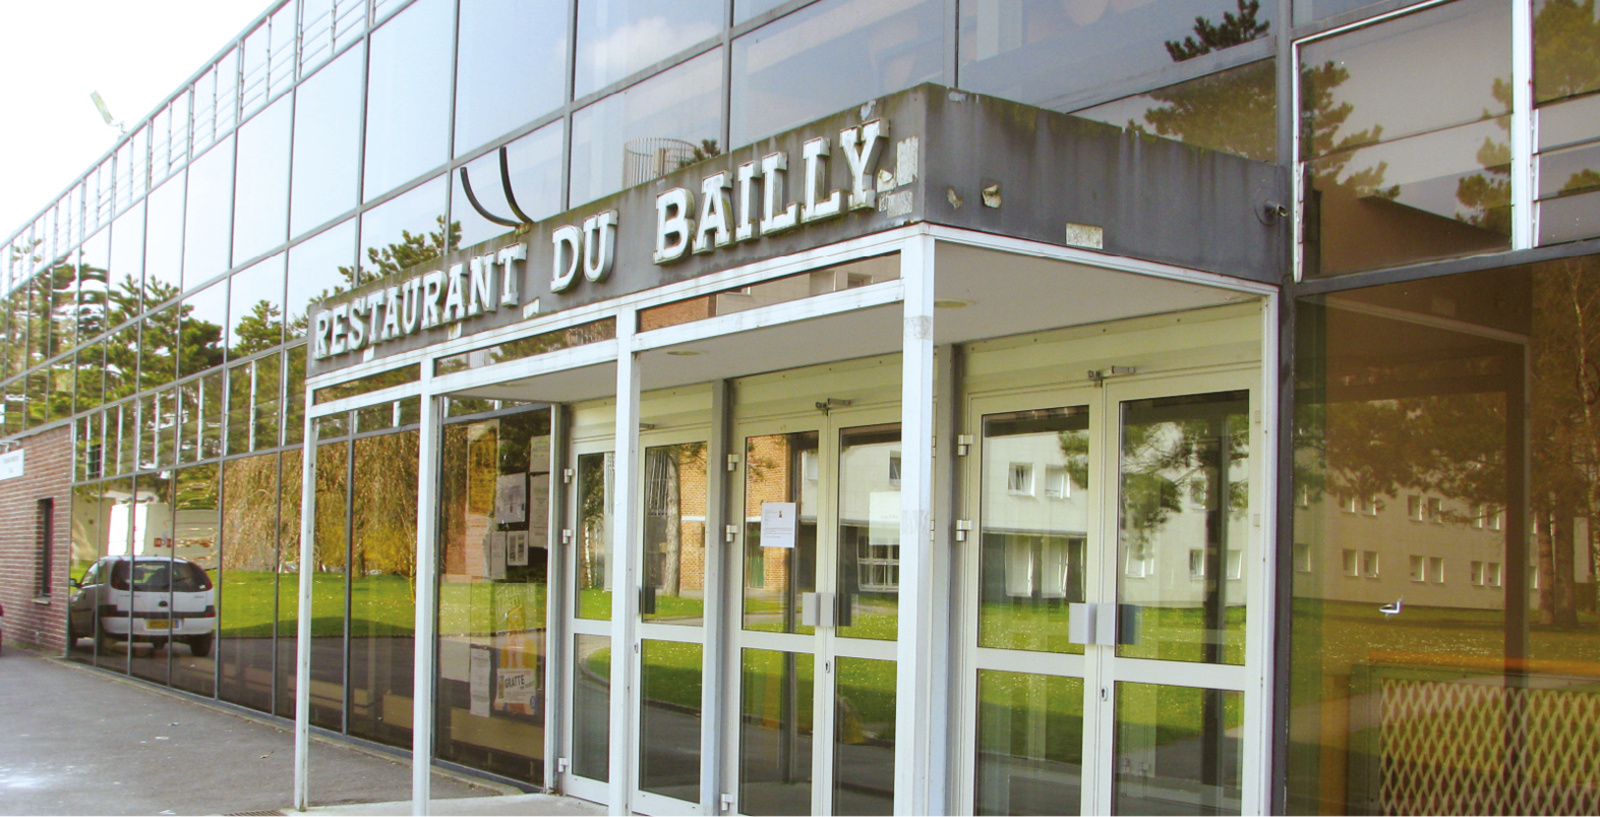 Restaurant du Bailly